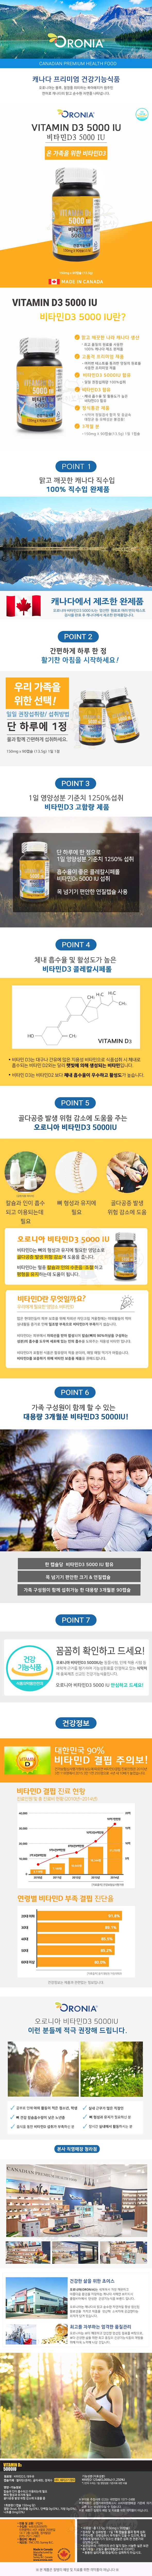 vitamin_d_5000iu_bbs_750.jpg